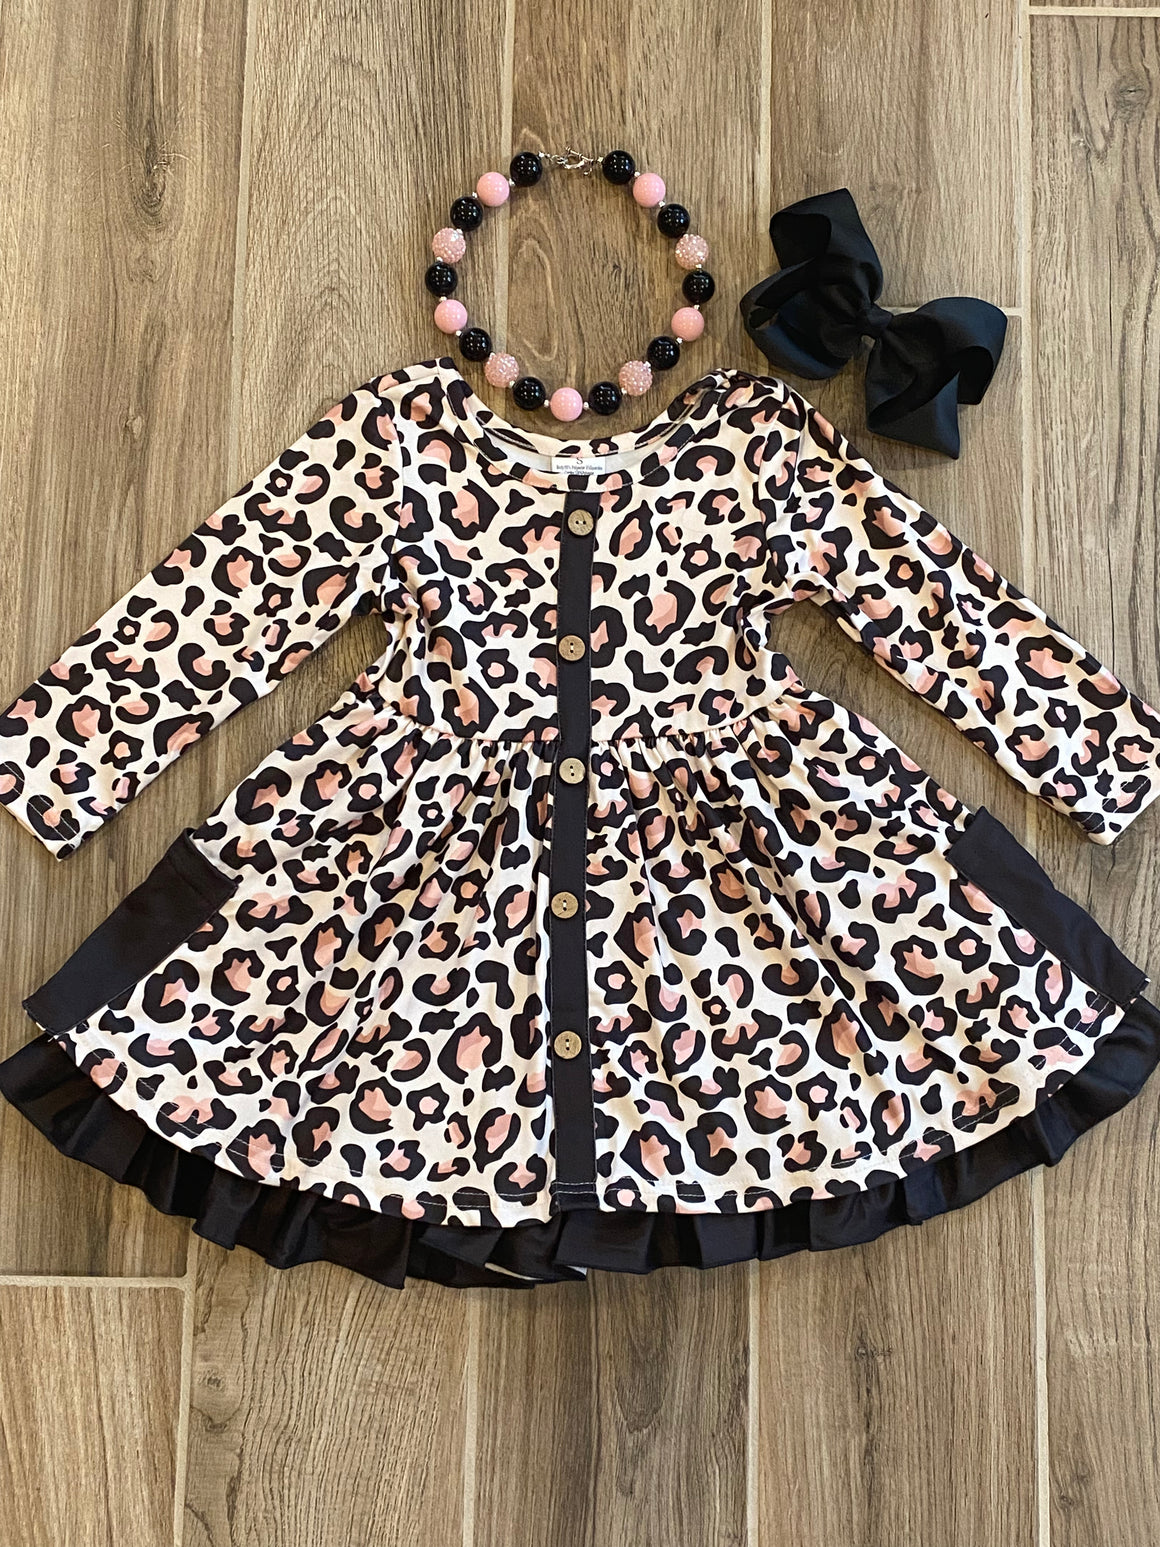 Dress - Black Leopard Ruffle